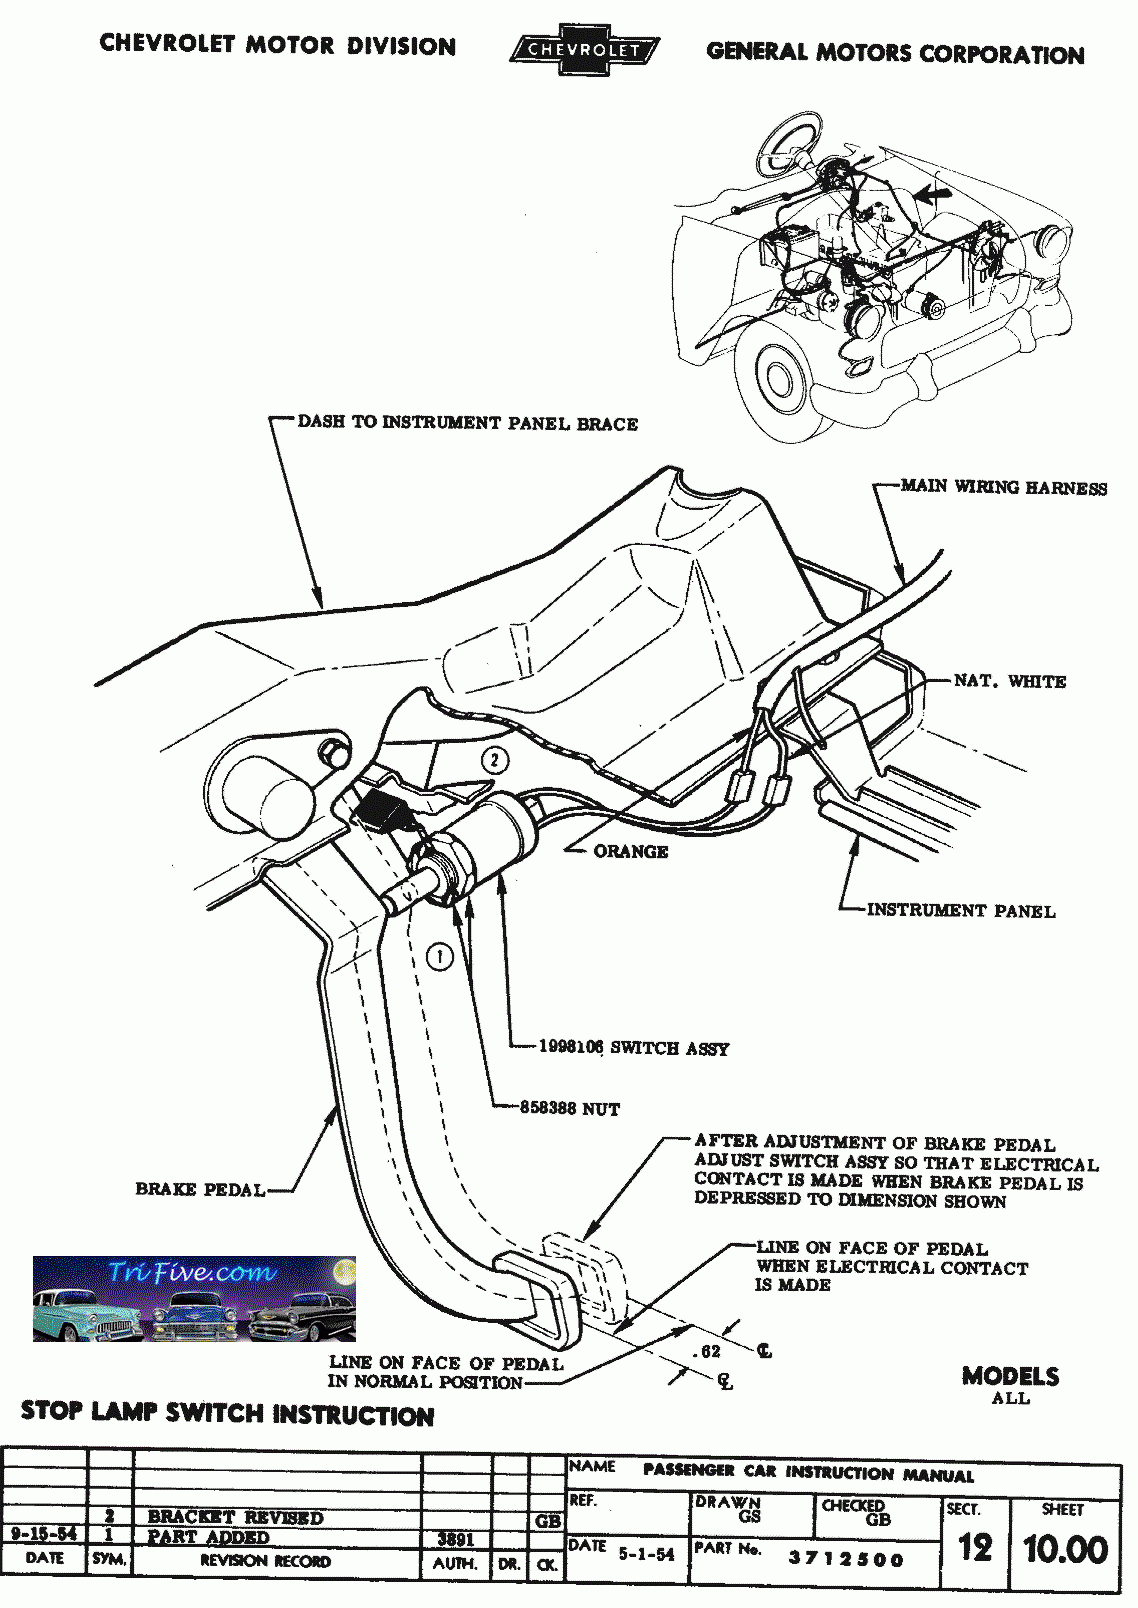 55 Chevy Wiring | Wiring Diagram - Chevy Steering Column Wiring Diagram